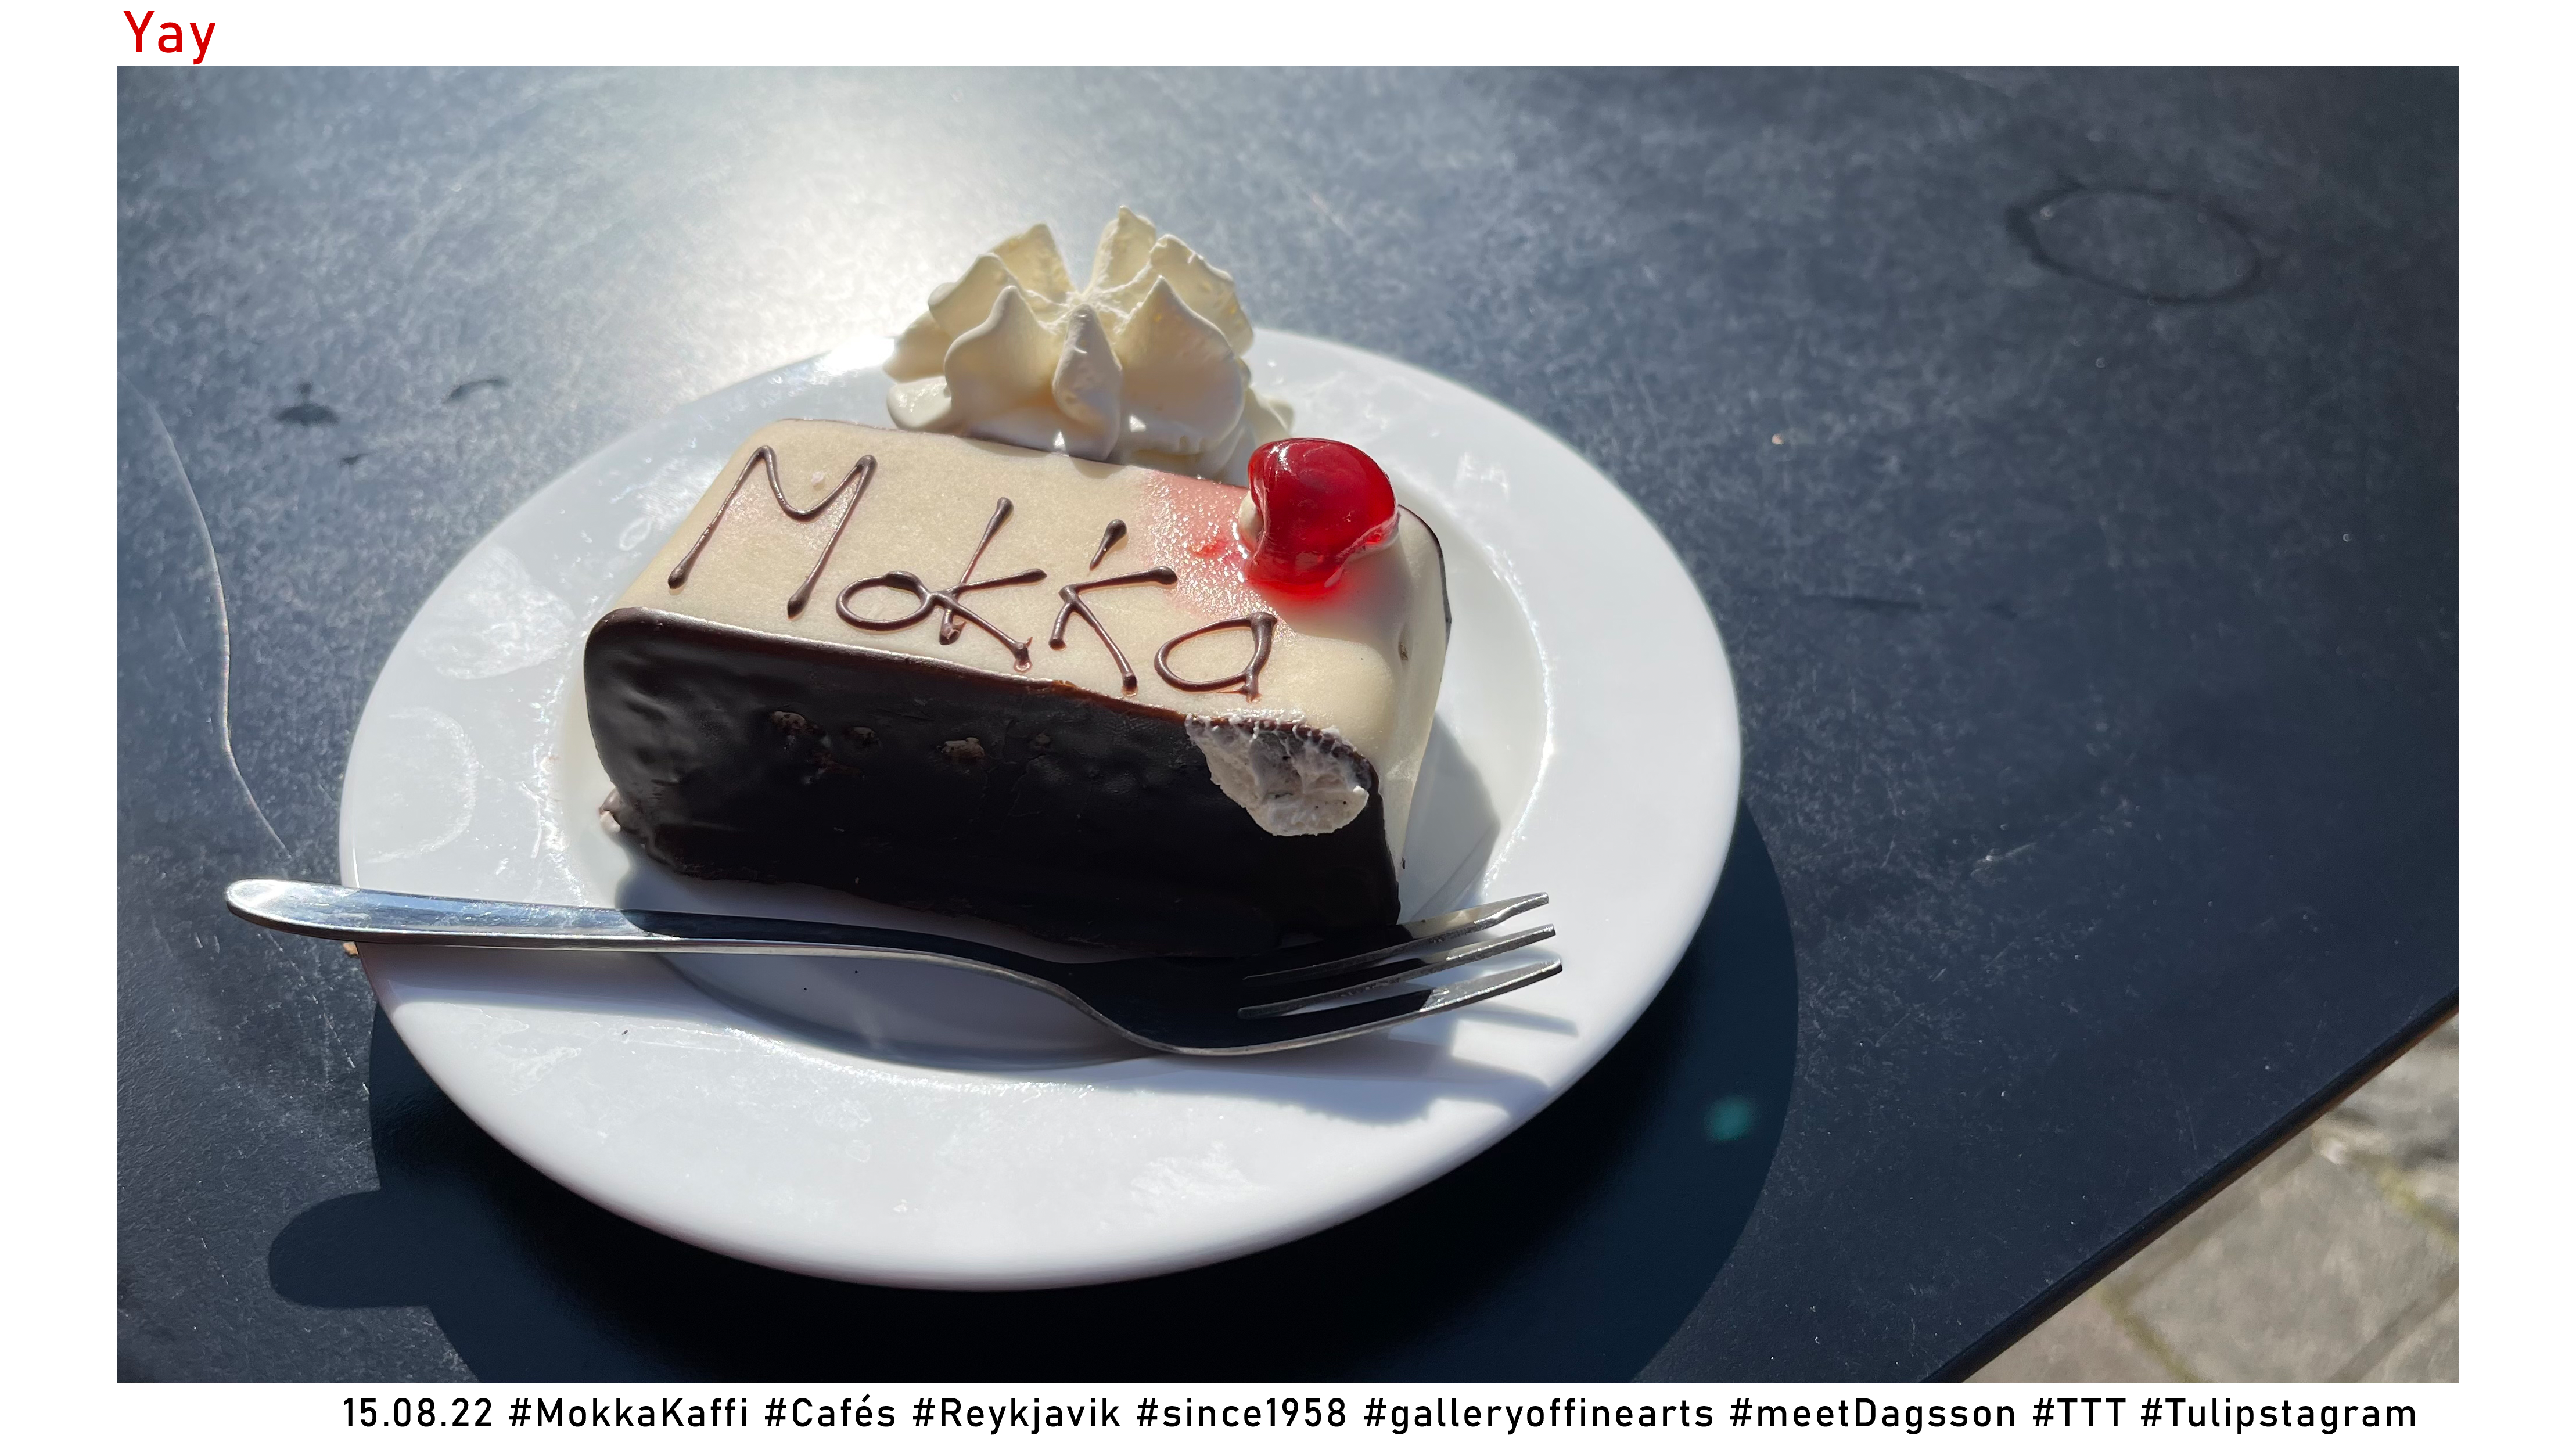 Yay - 15.08.22 #MokkaKaffi #Cafés #Reykjavik #since1958 #galleryoffinearts #meetDagsson #TTT #Tulipstagram